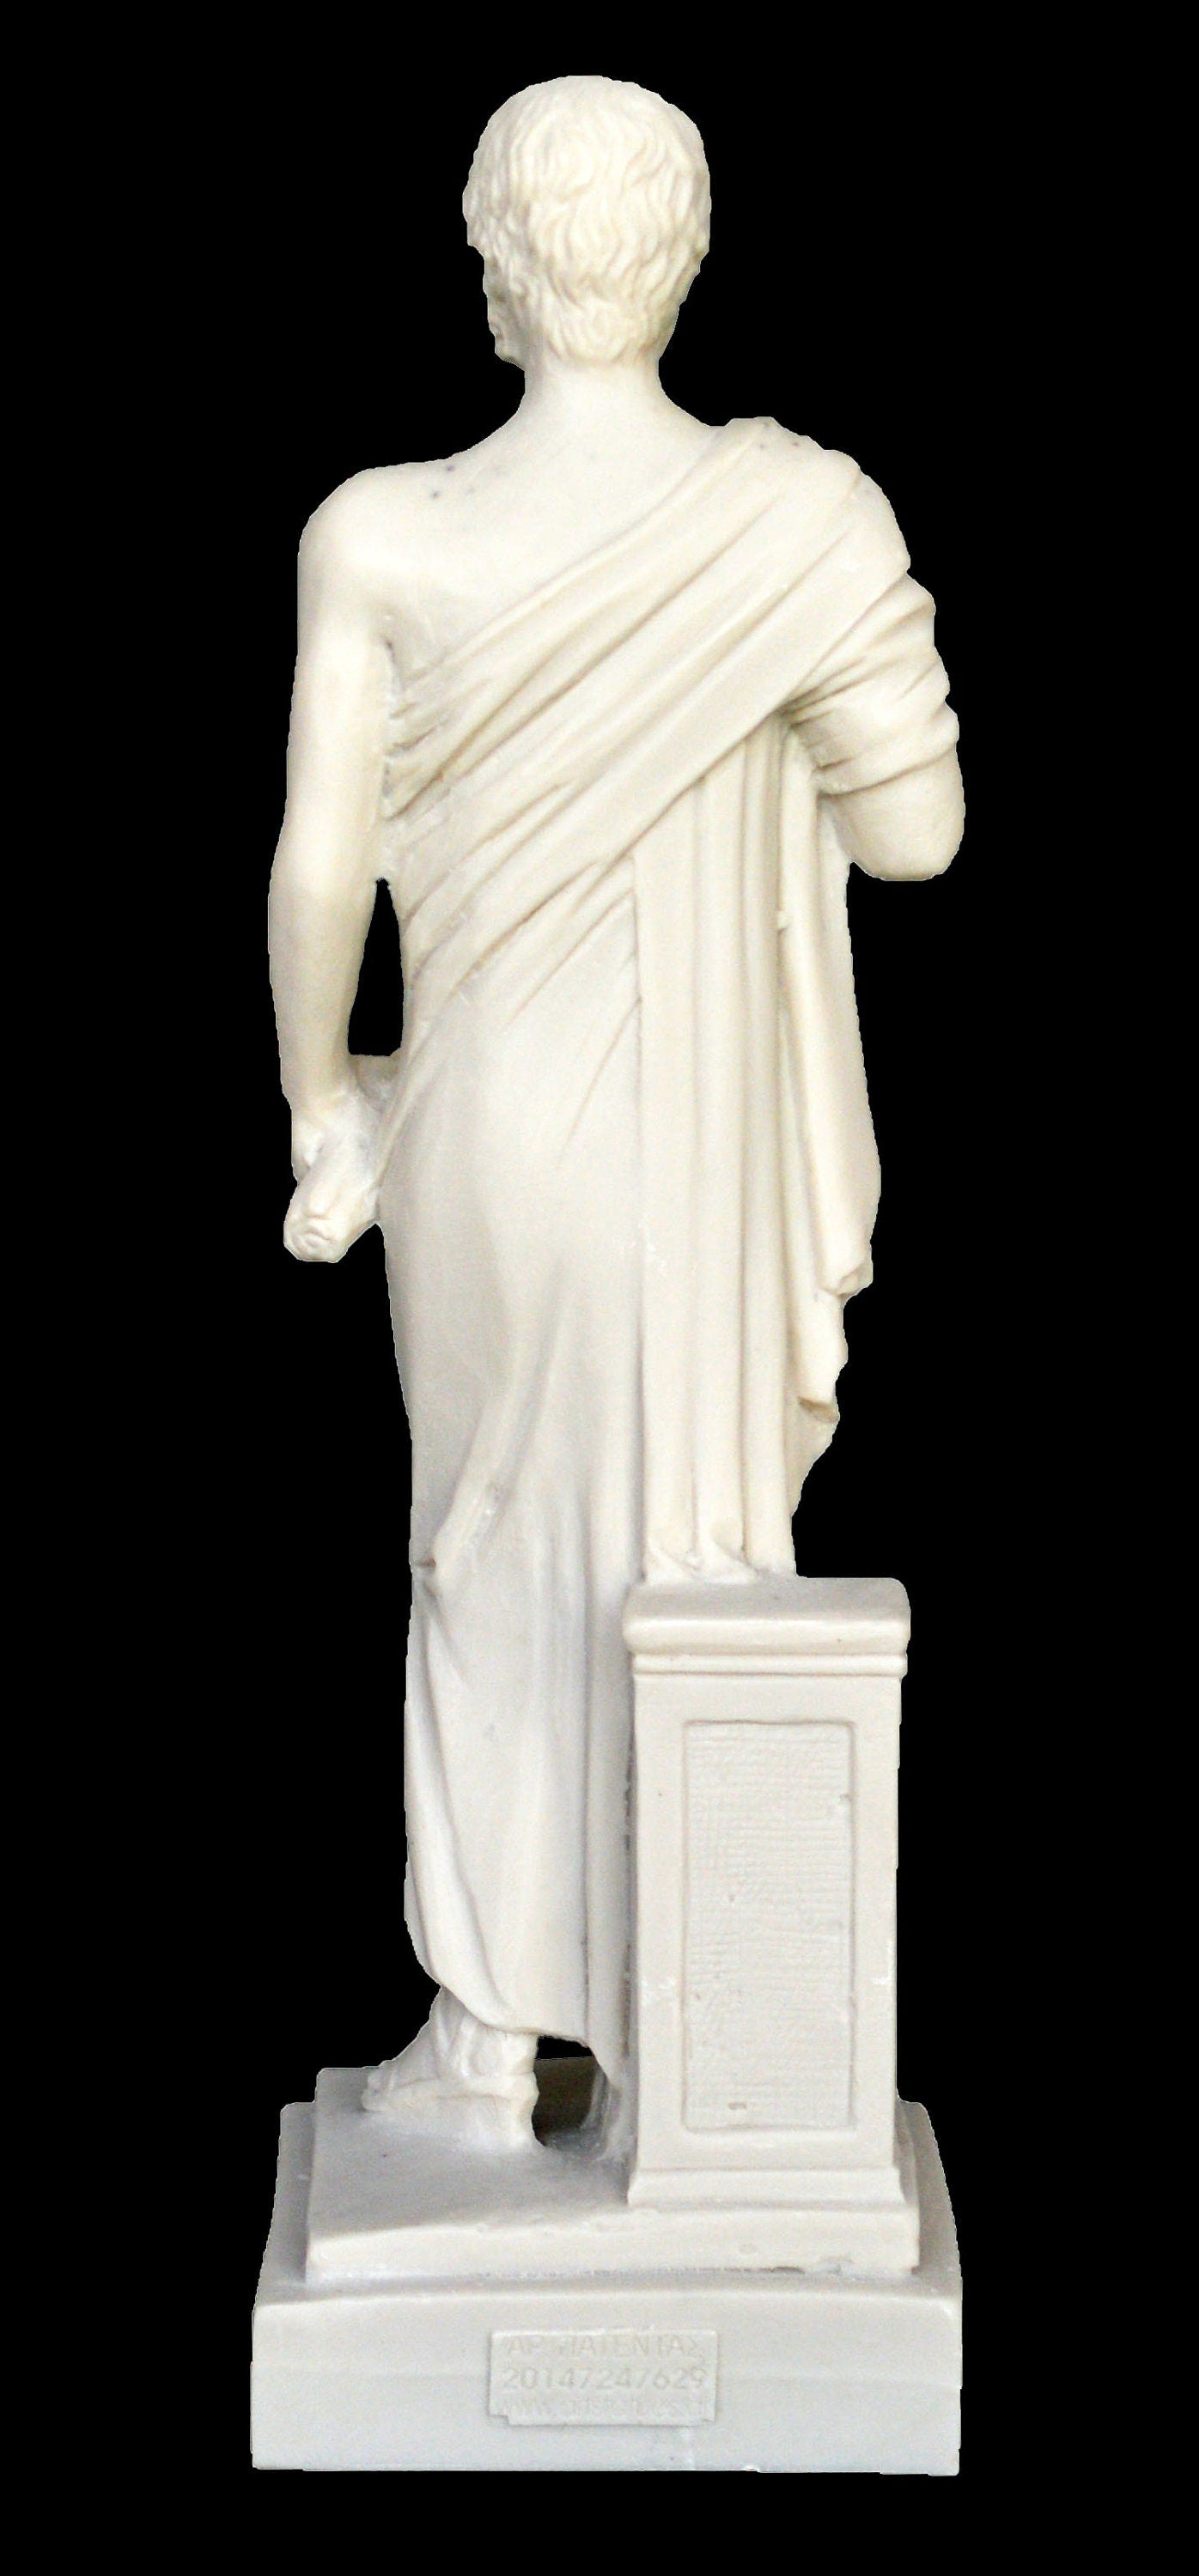 Aristotle -  Ancient Greek philosopher - 384–322 BC - Student of Plato - Teacher of Alexander the Great - alabaster statue sculpture